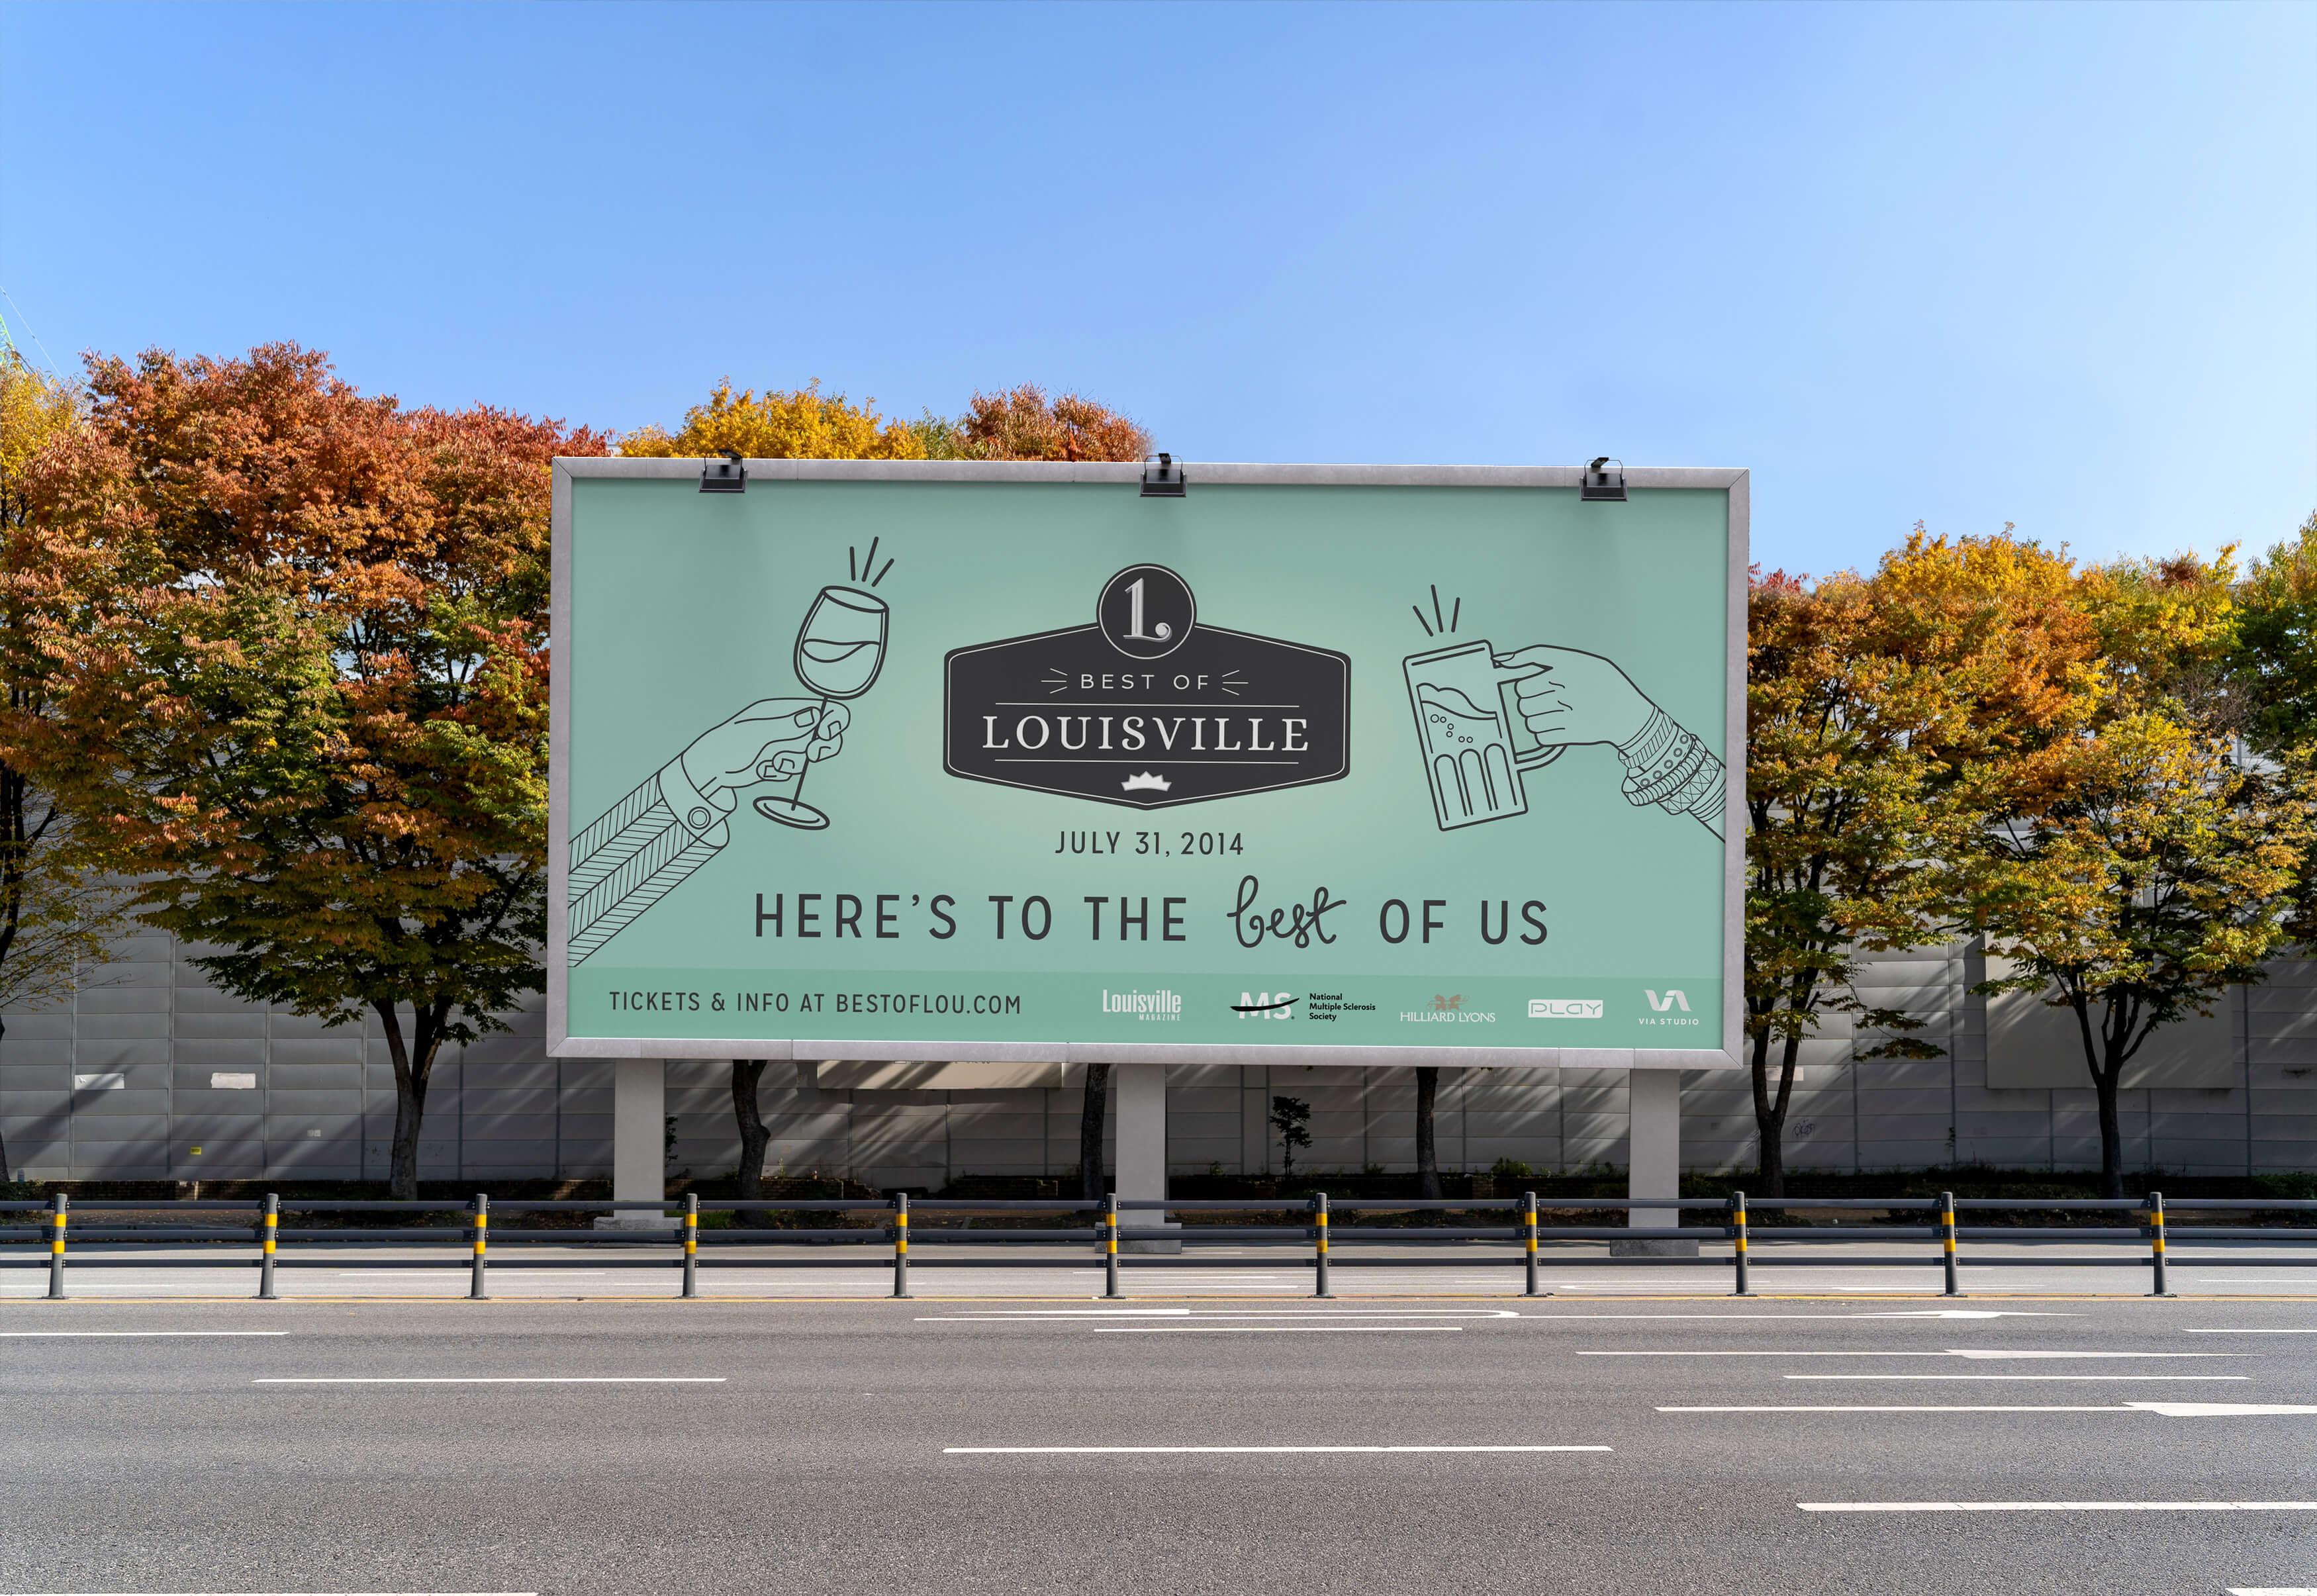 Best of Louisville billboard design in front of trees.